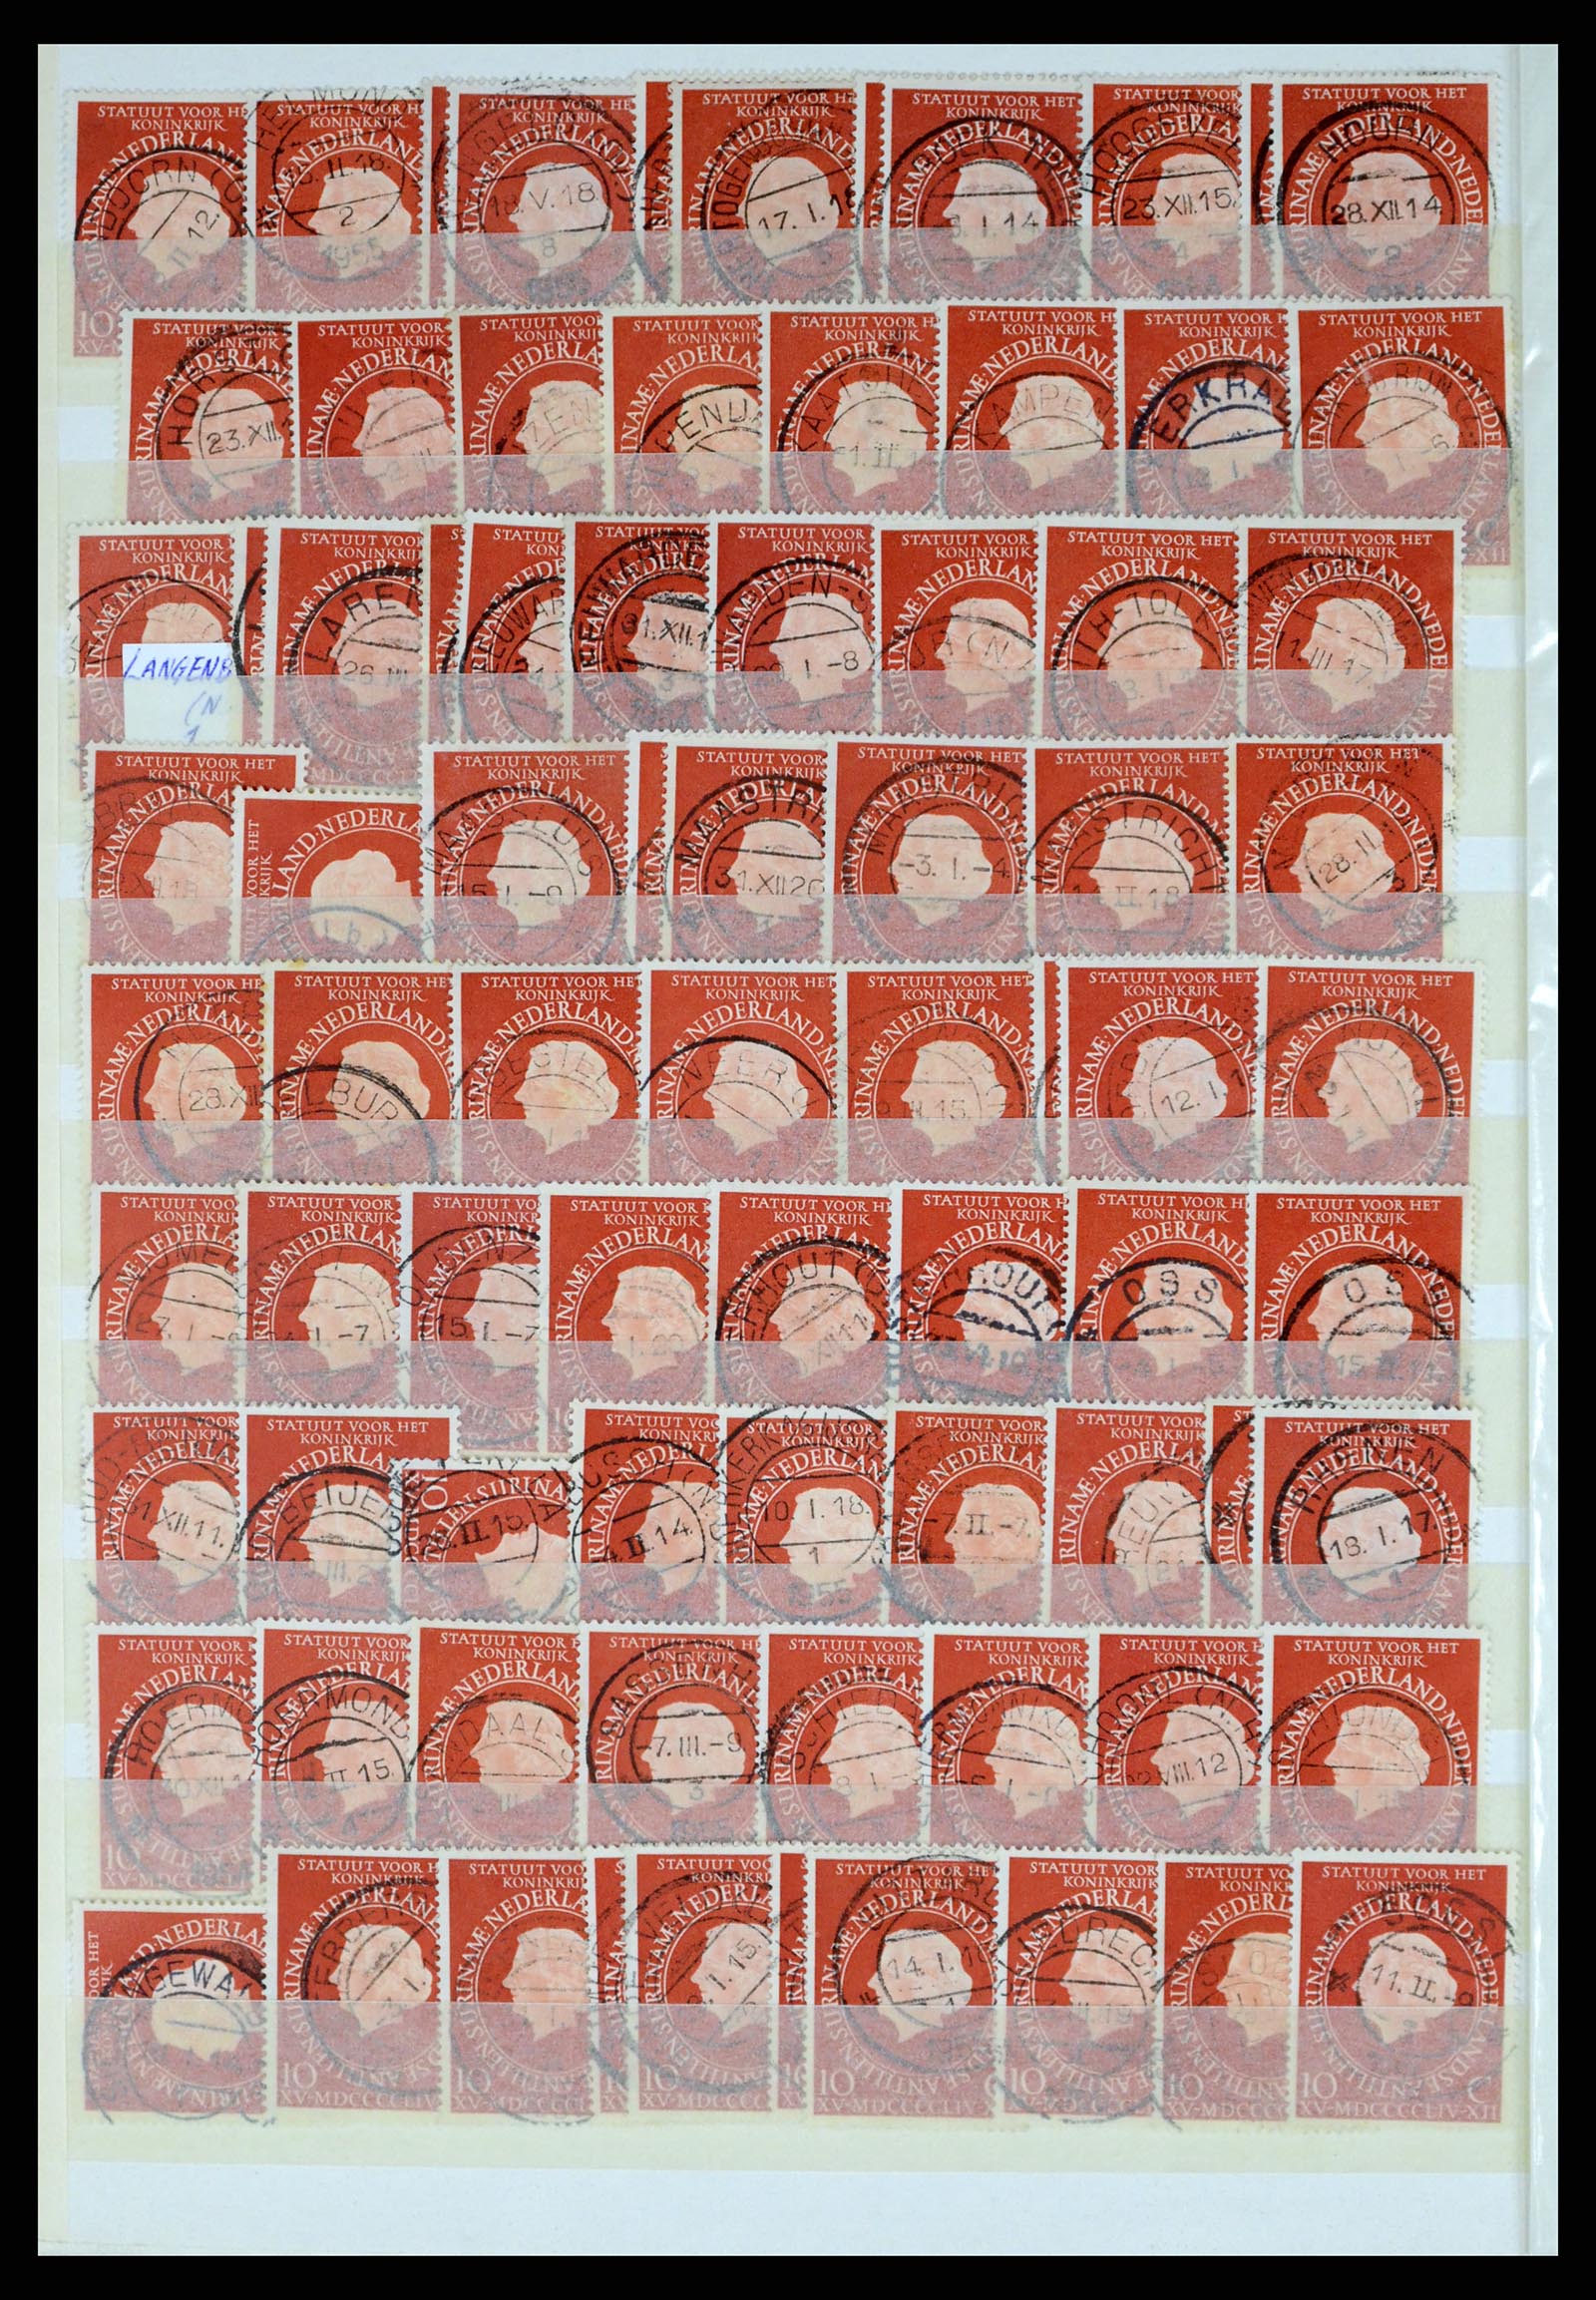 37424 050 - Stamp collection 37424 Netherlands shortbar cancels.